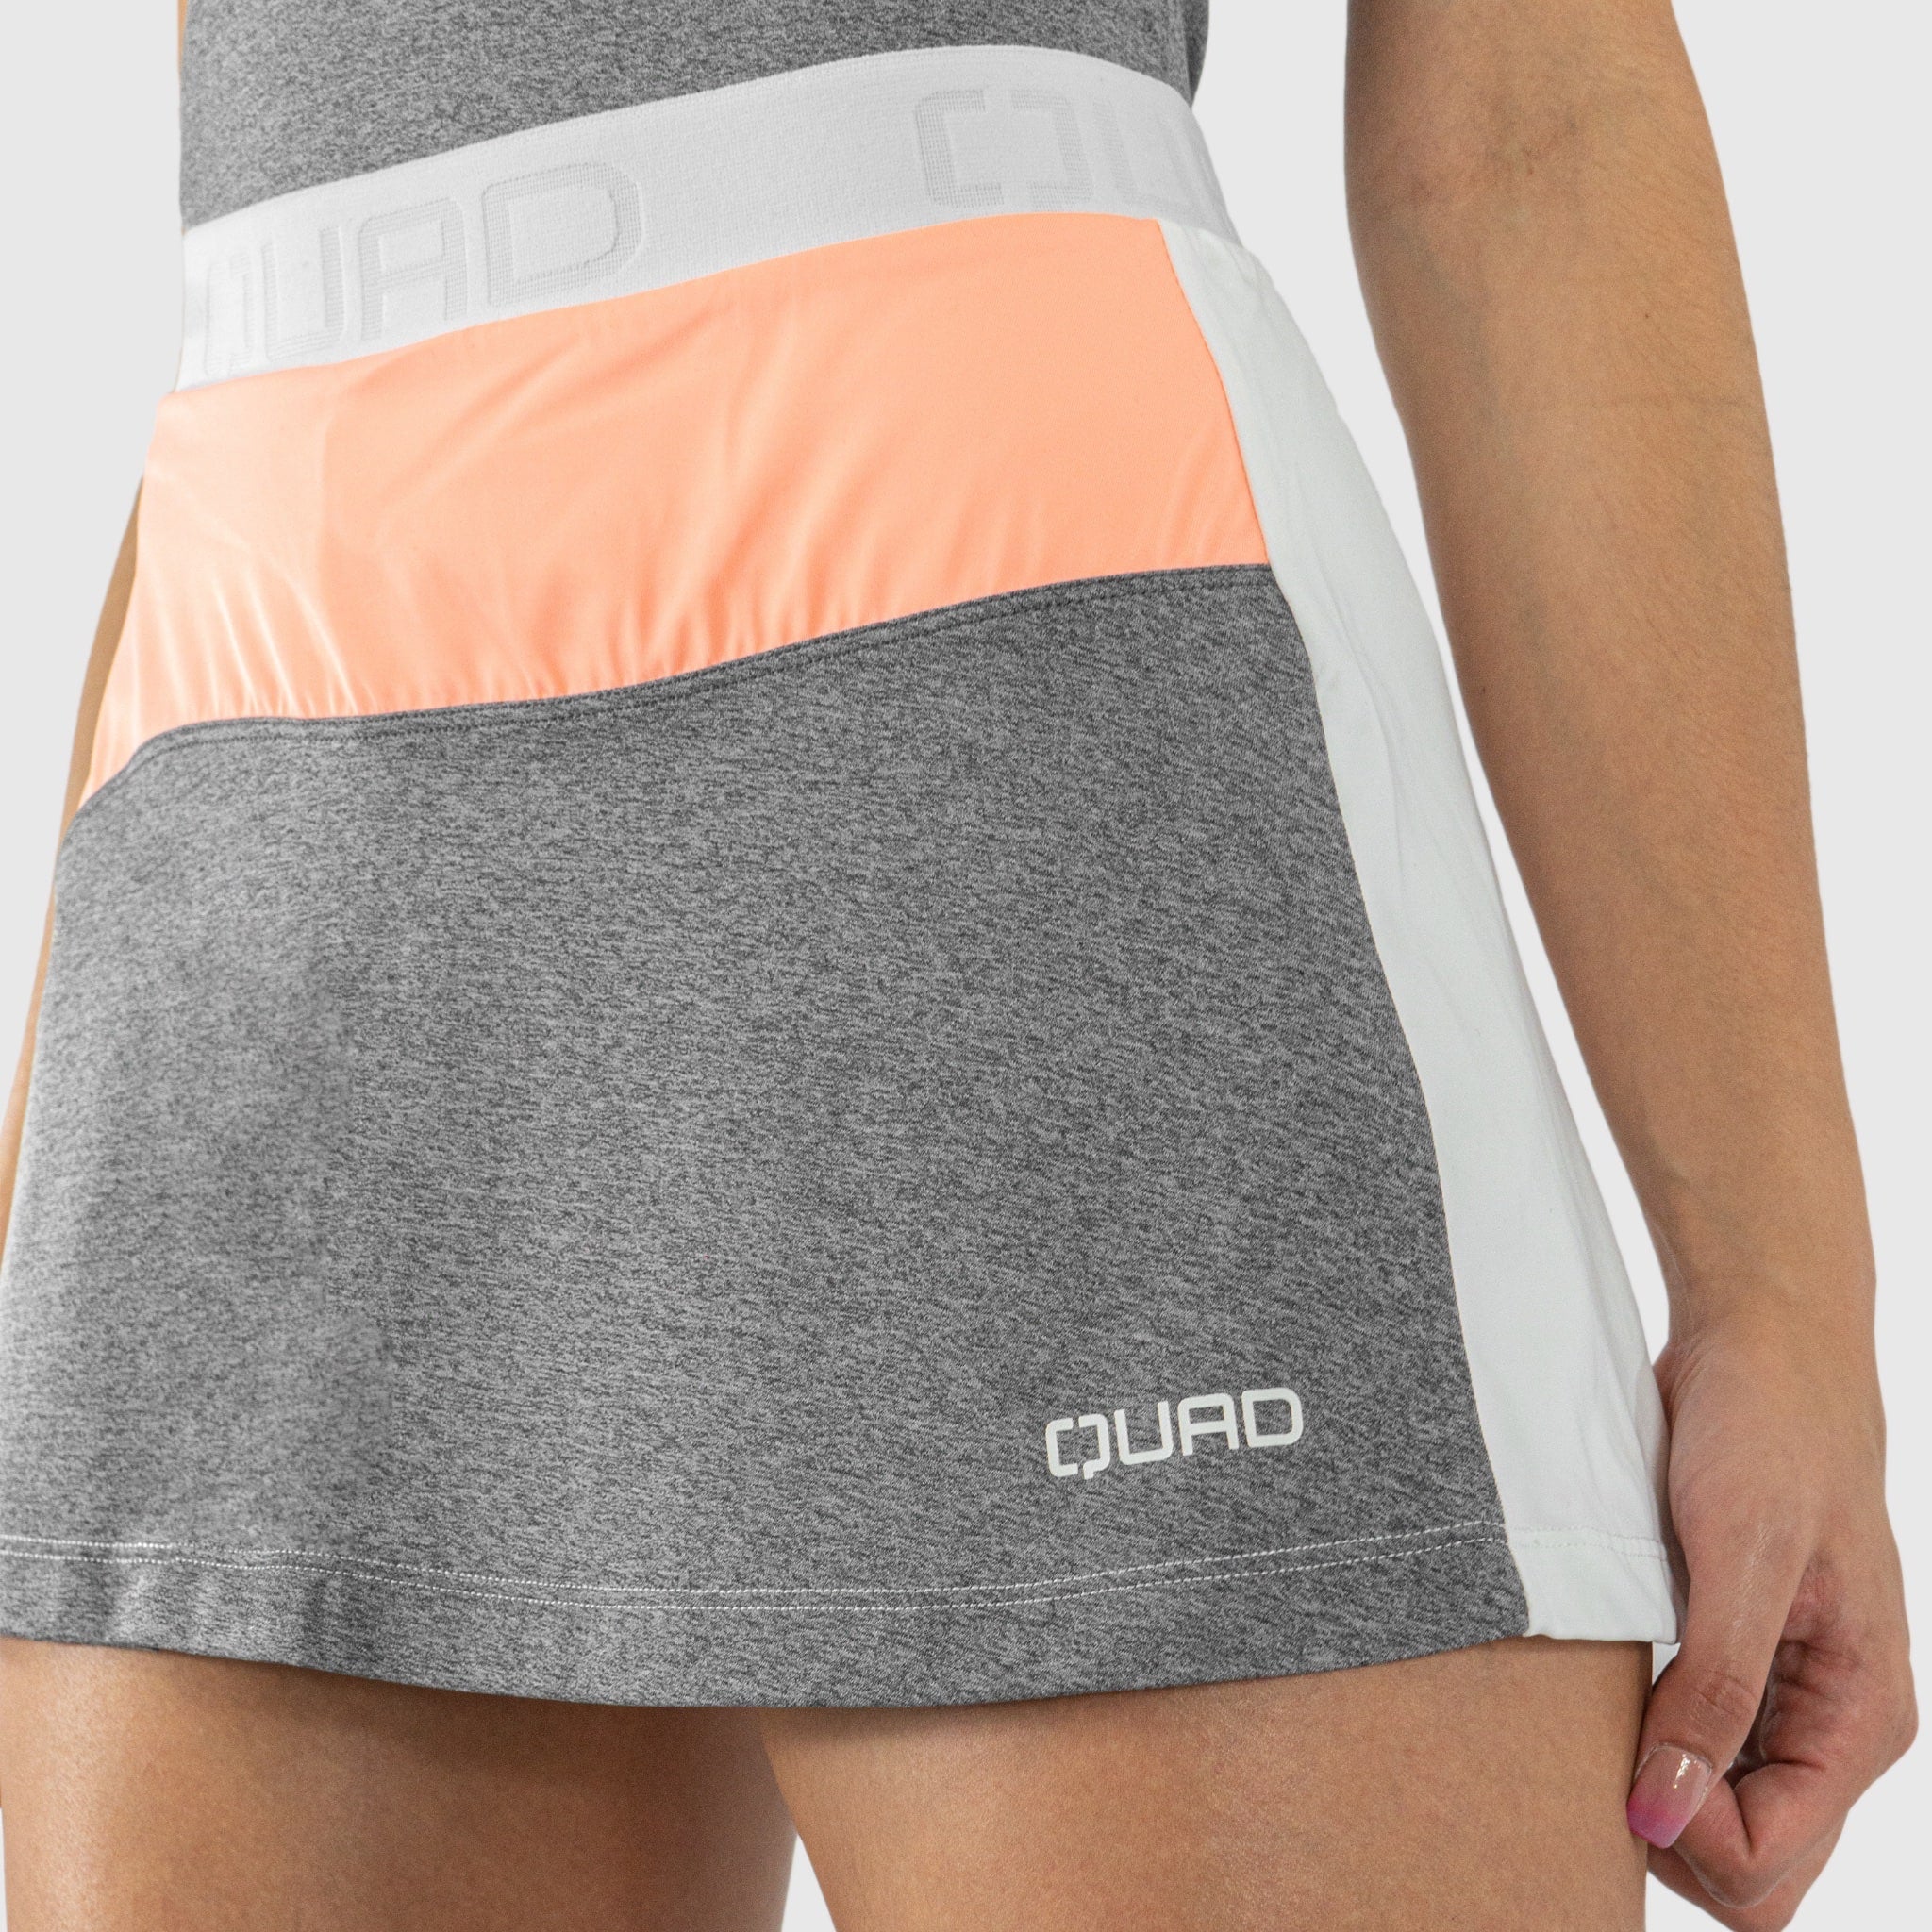 Quad Padel Skirt & Top Set skirt front view